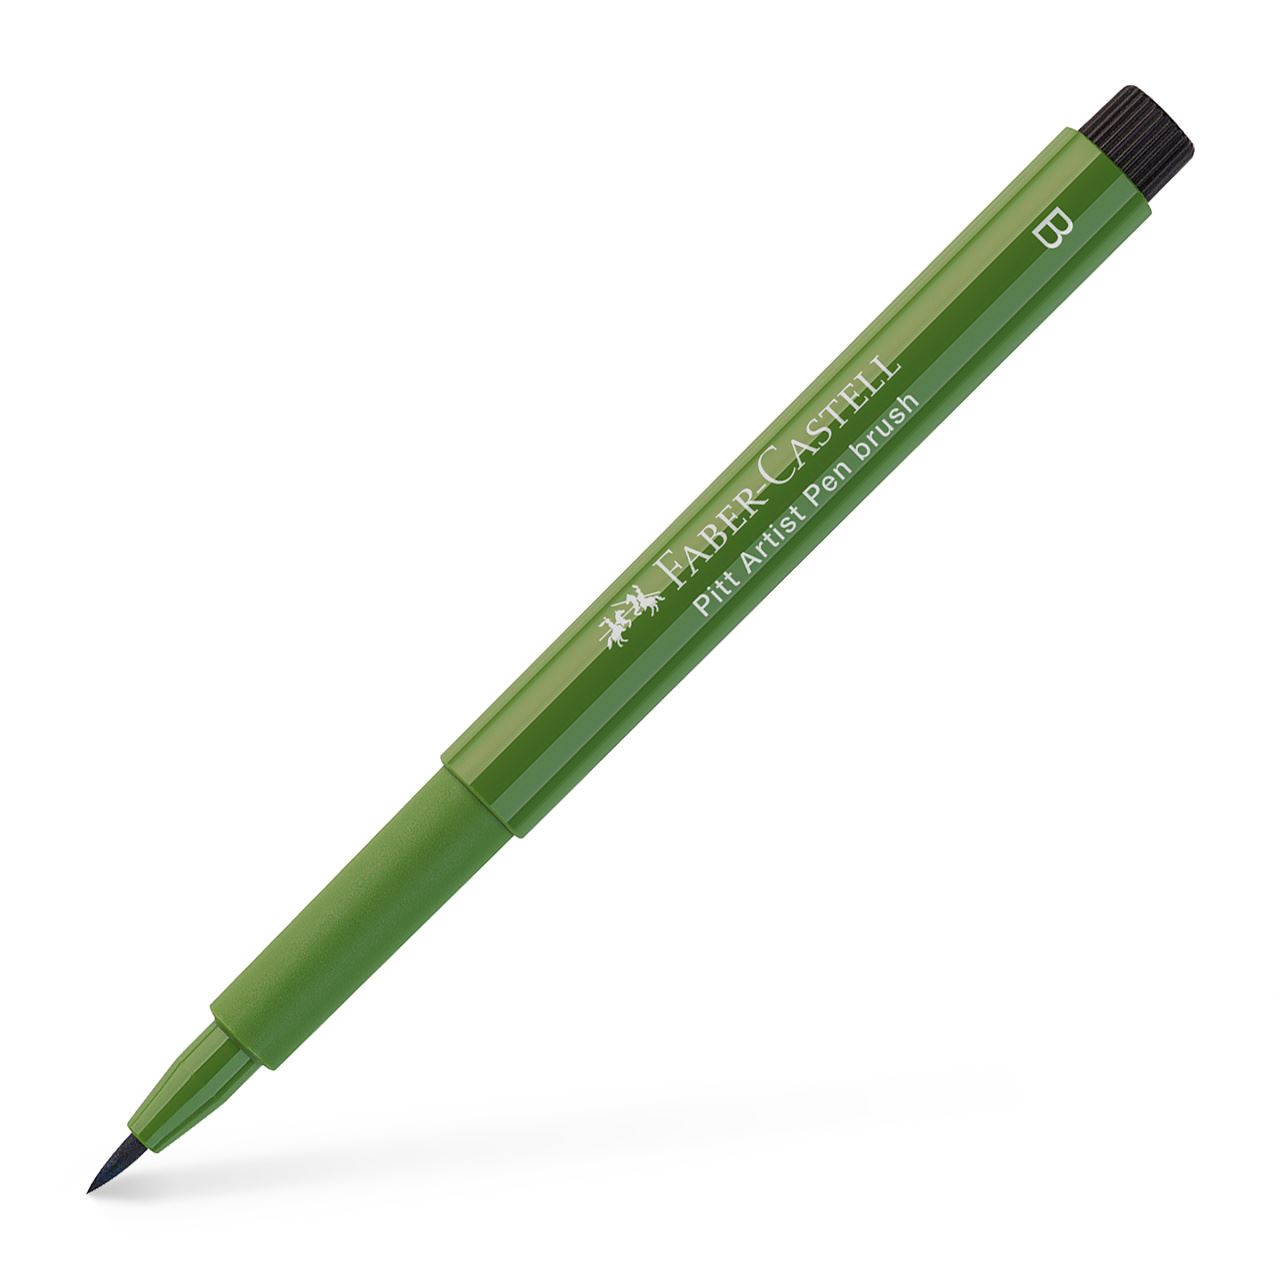 Faber-Castell - Rotulador Pitt Artist Pen Brush, verde óxido de cromo opaco